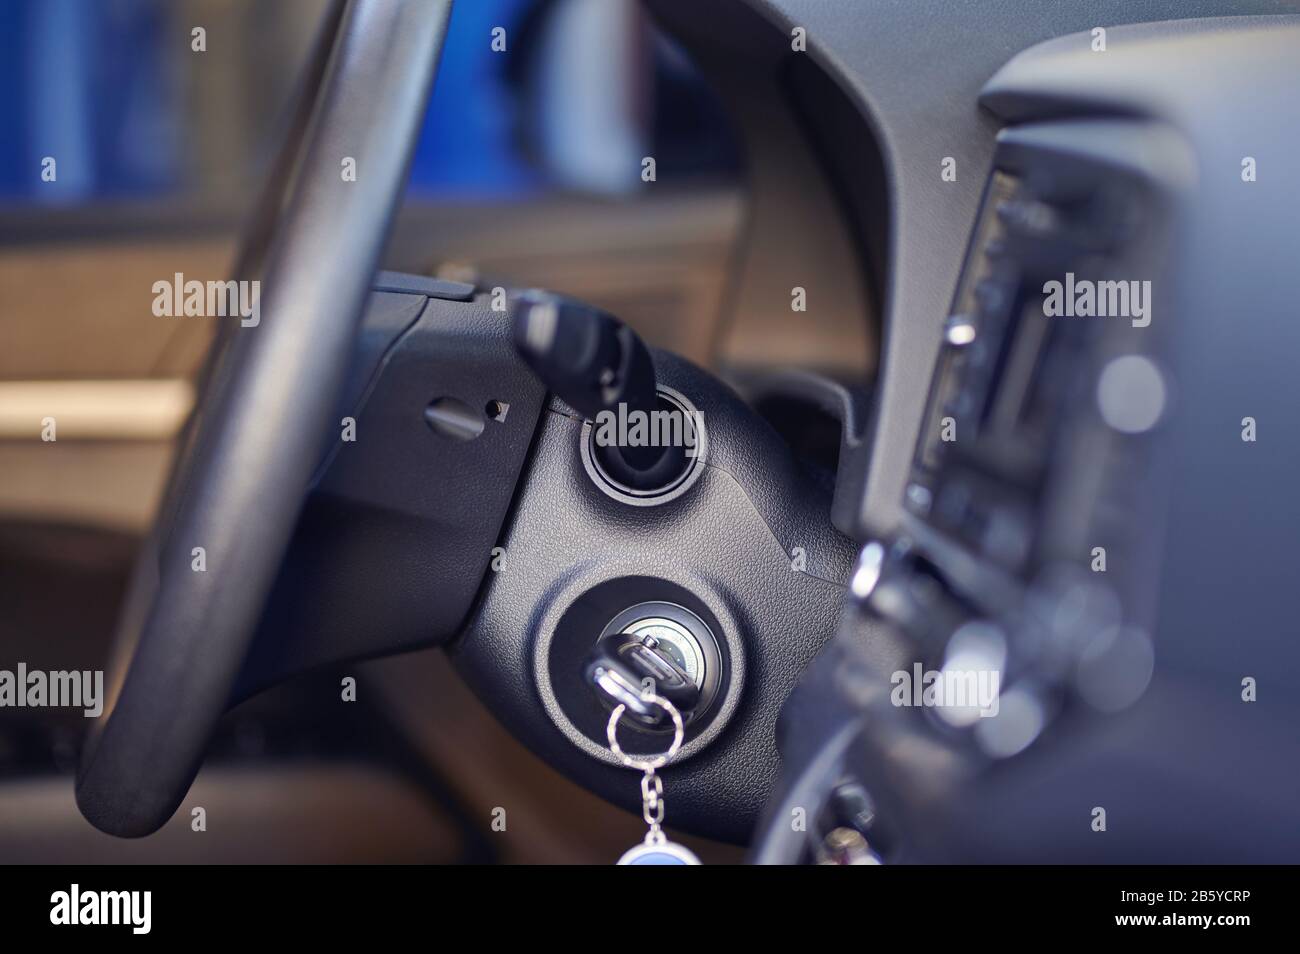 Lenkradschloss -Fotos und -Bildmaterial in hoher Auflösung – Alamy